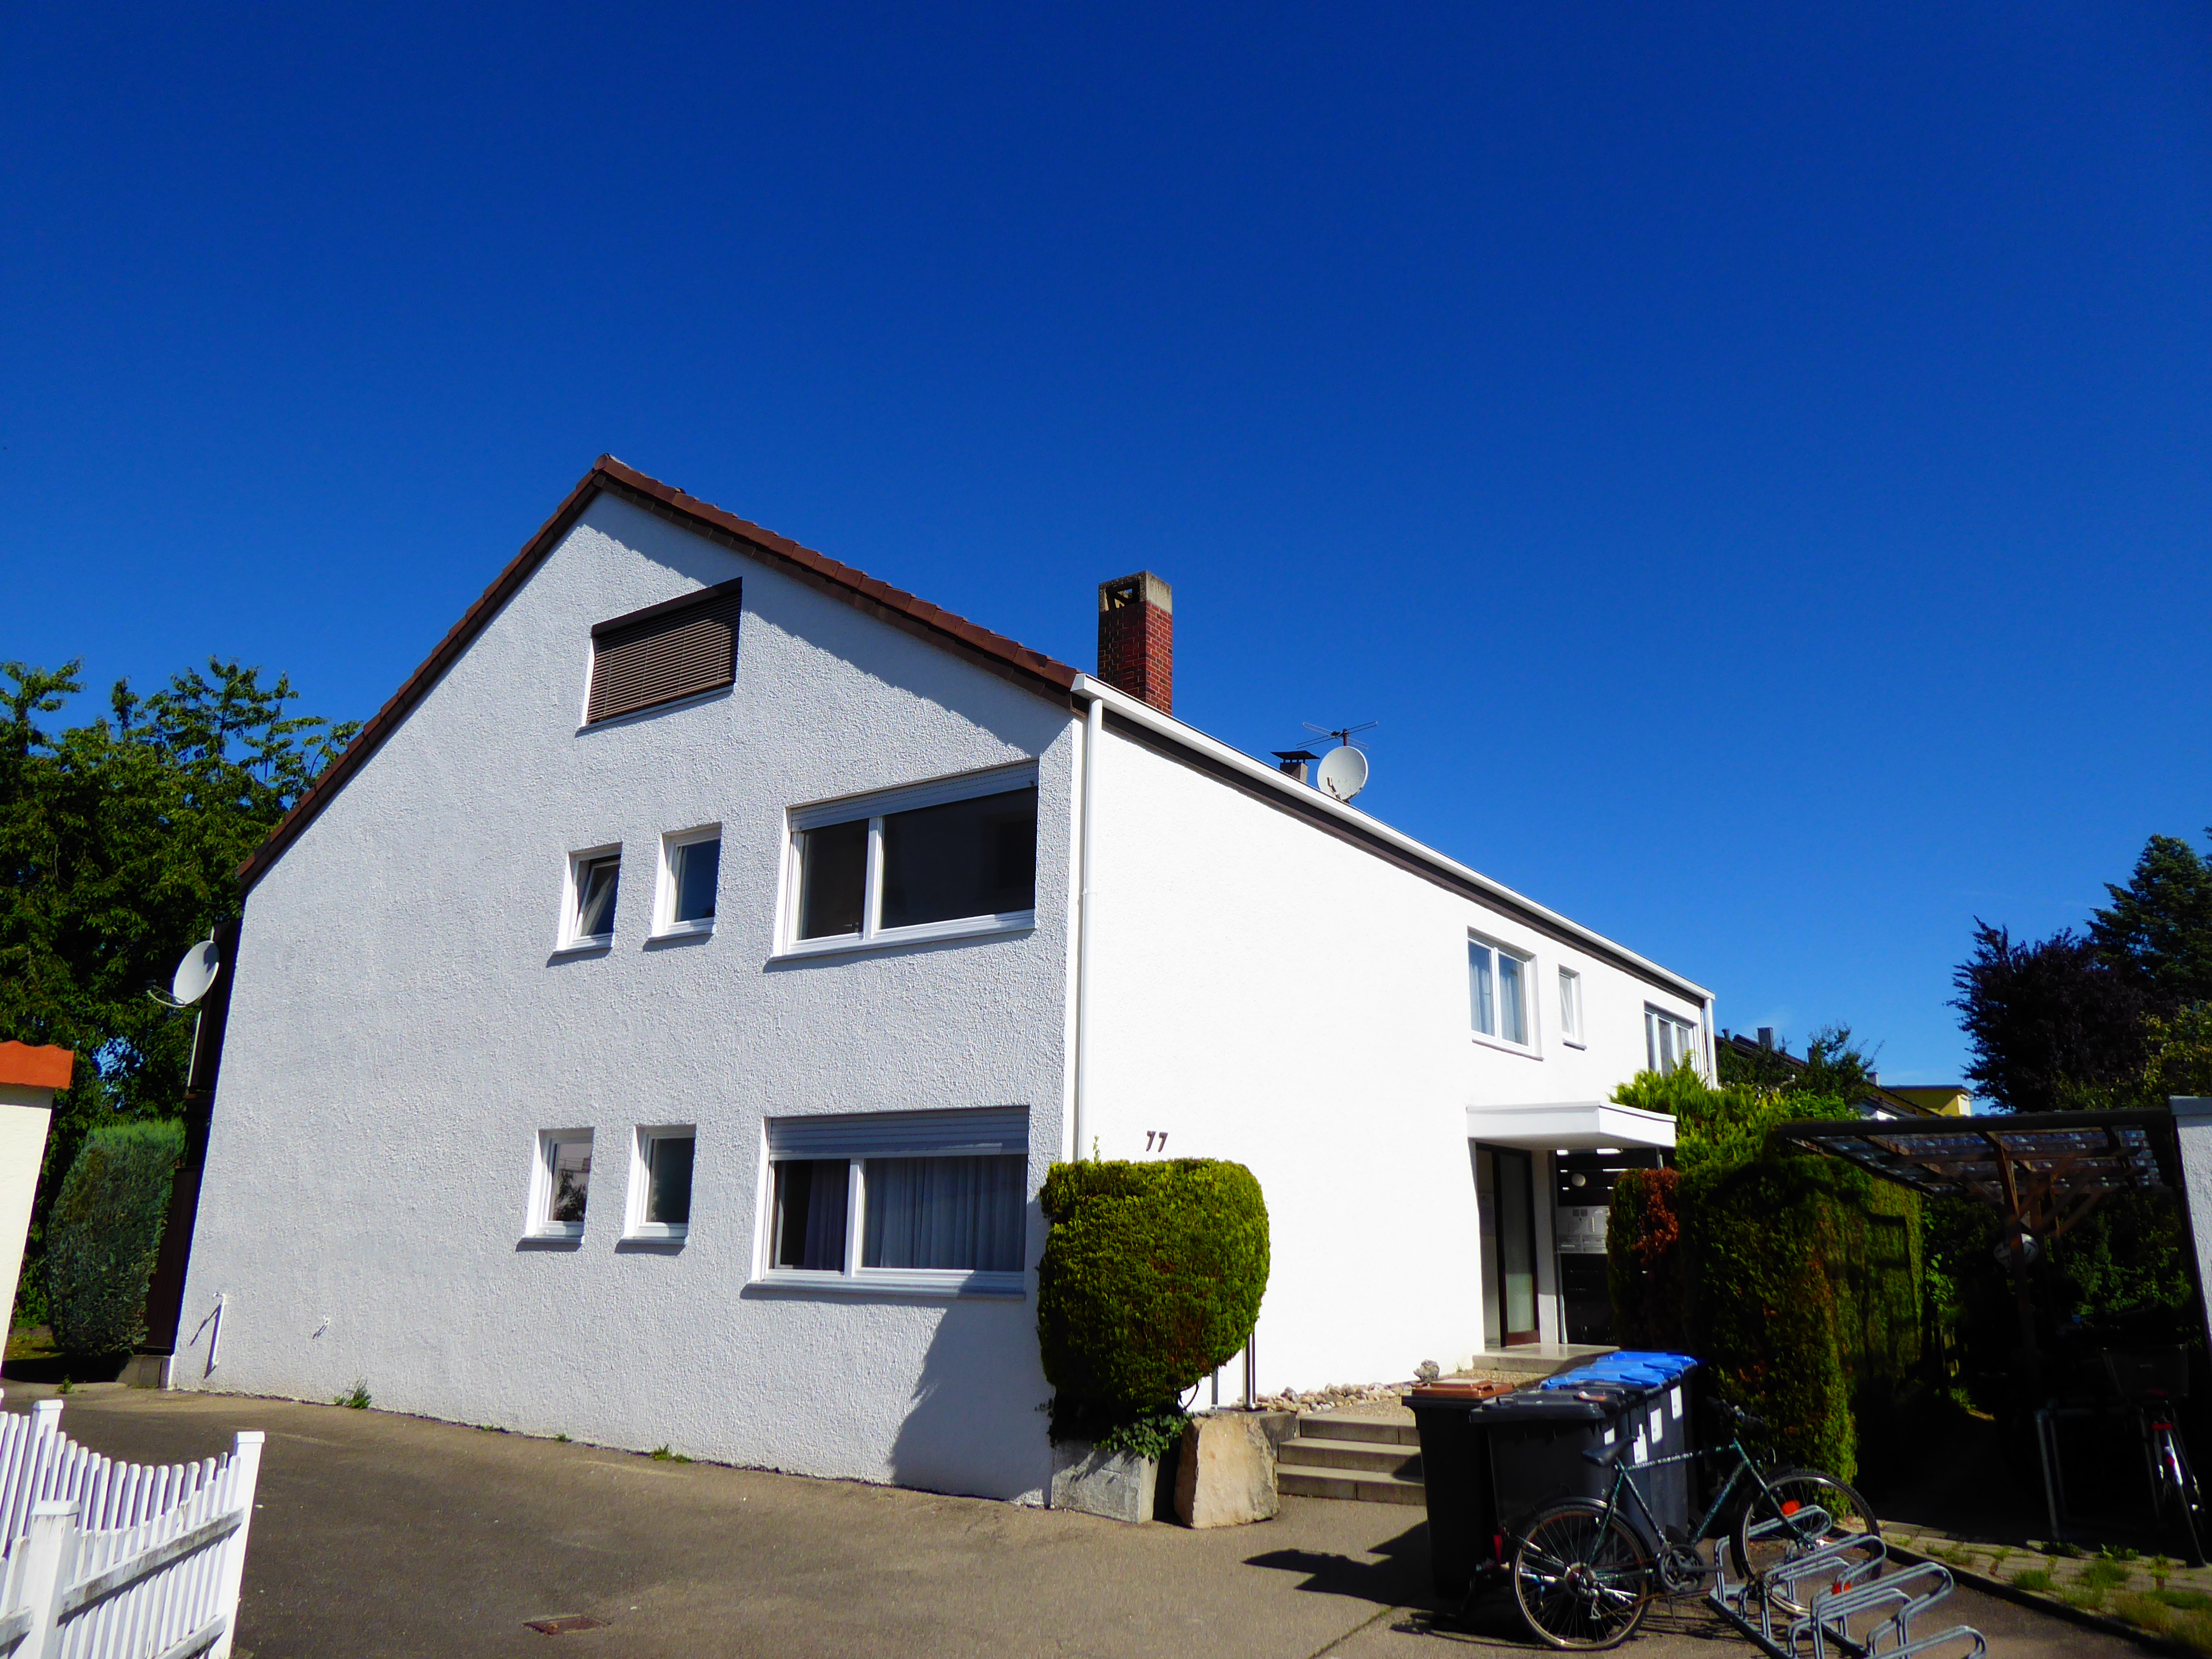 1-Zimmer-Wohnung – Schopenhauerstraße 77, Reutlingen-Betzingen